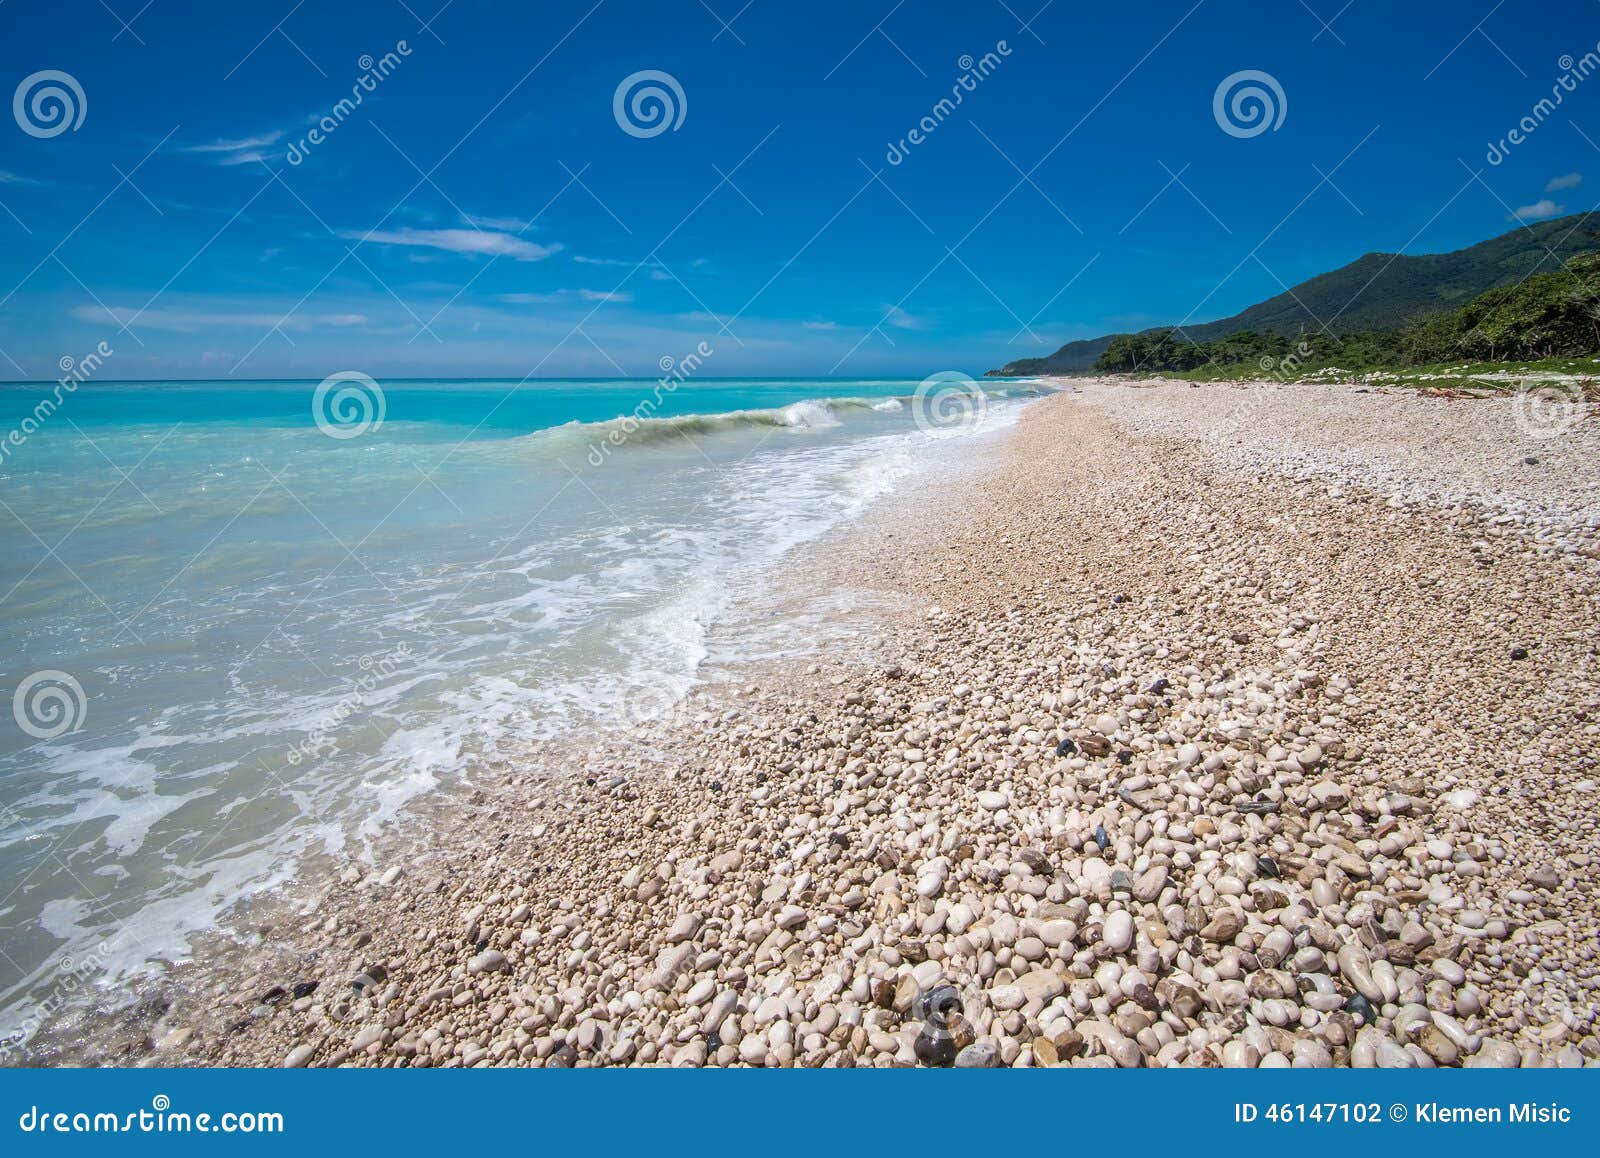 dream rocky beach near paraiso, barahona peninsula in dominican republic